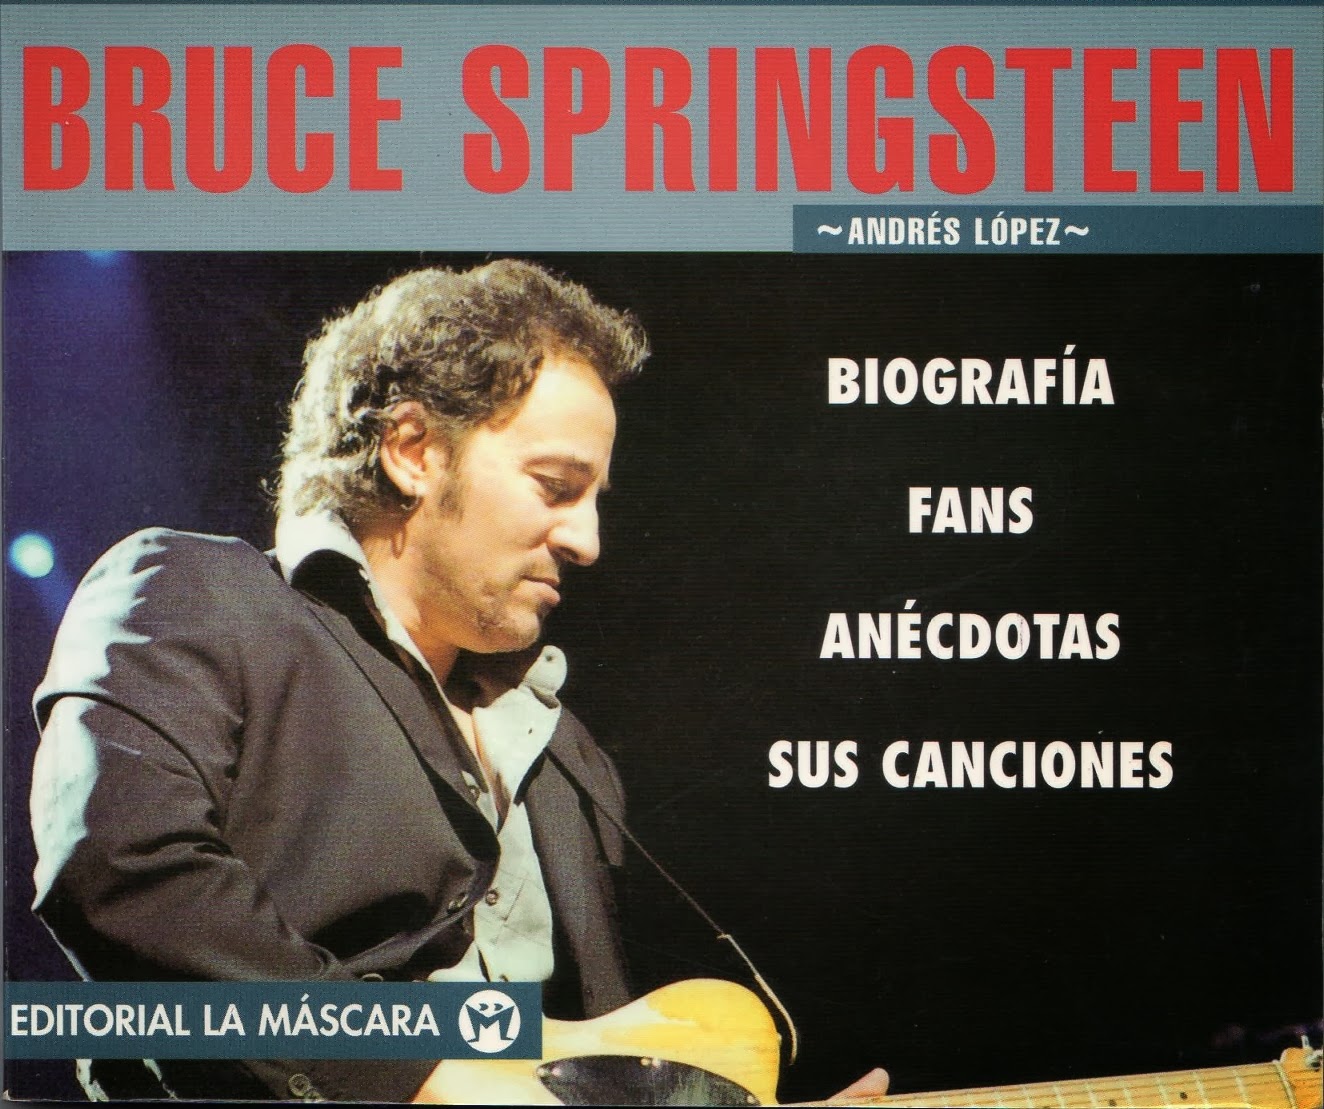 Bruce Springsteen por Andrés López